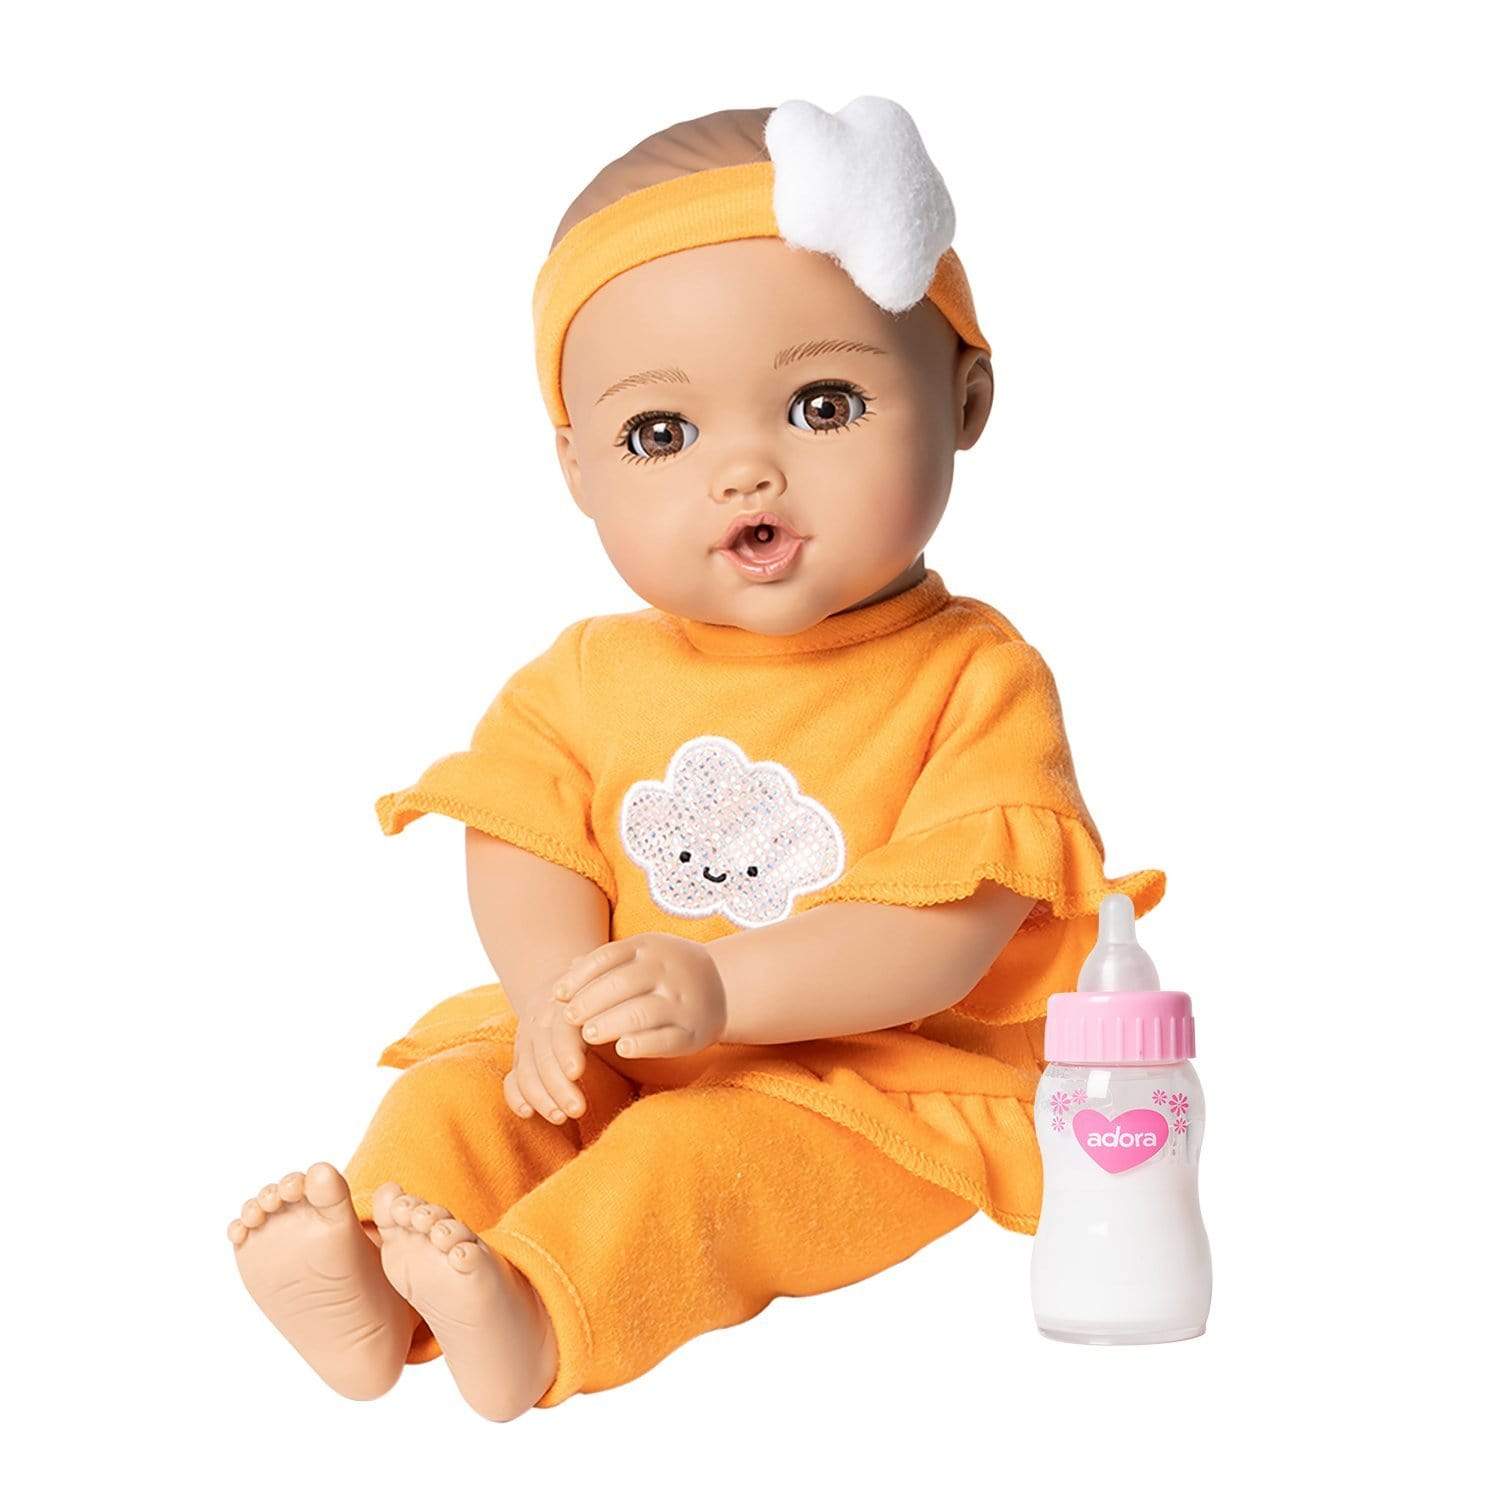 Adora Realistic Baby Doll for Kids- NurtureTime Baby Sweet Orange Brown Eyes